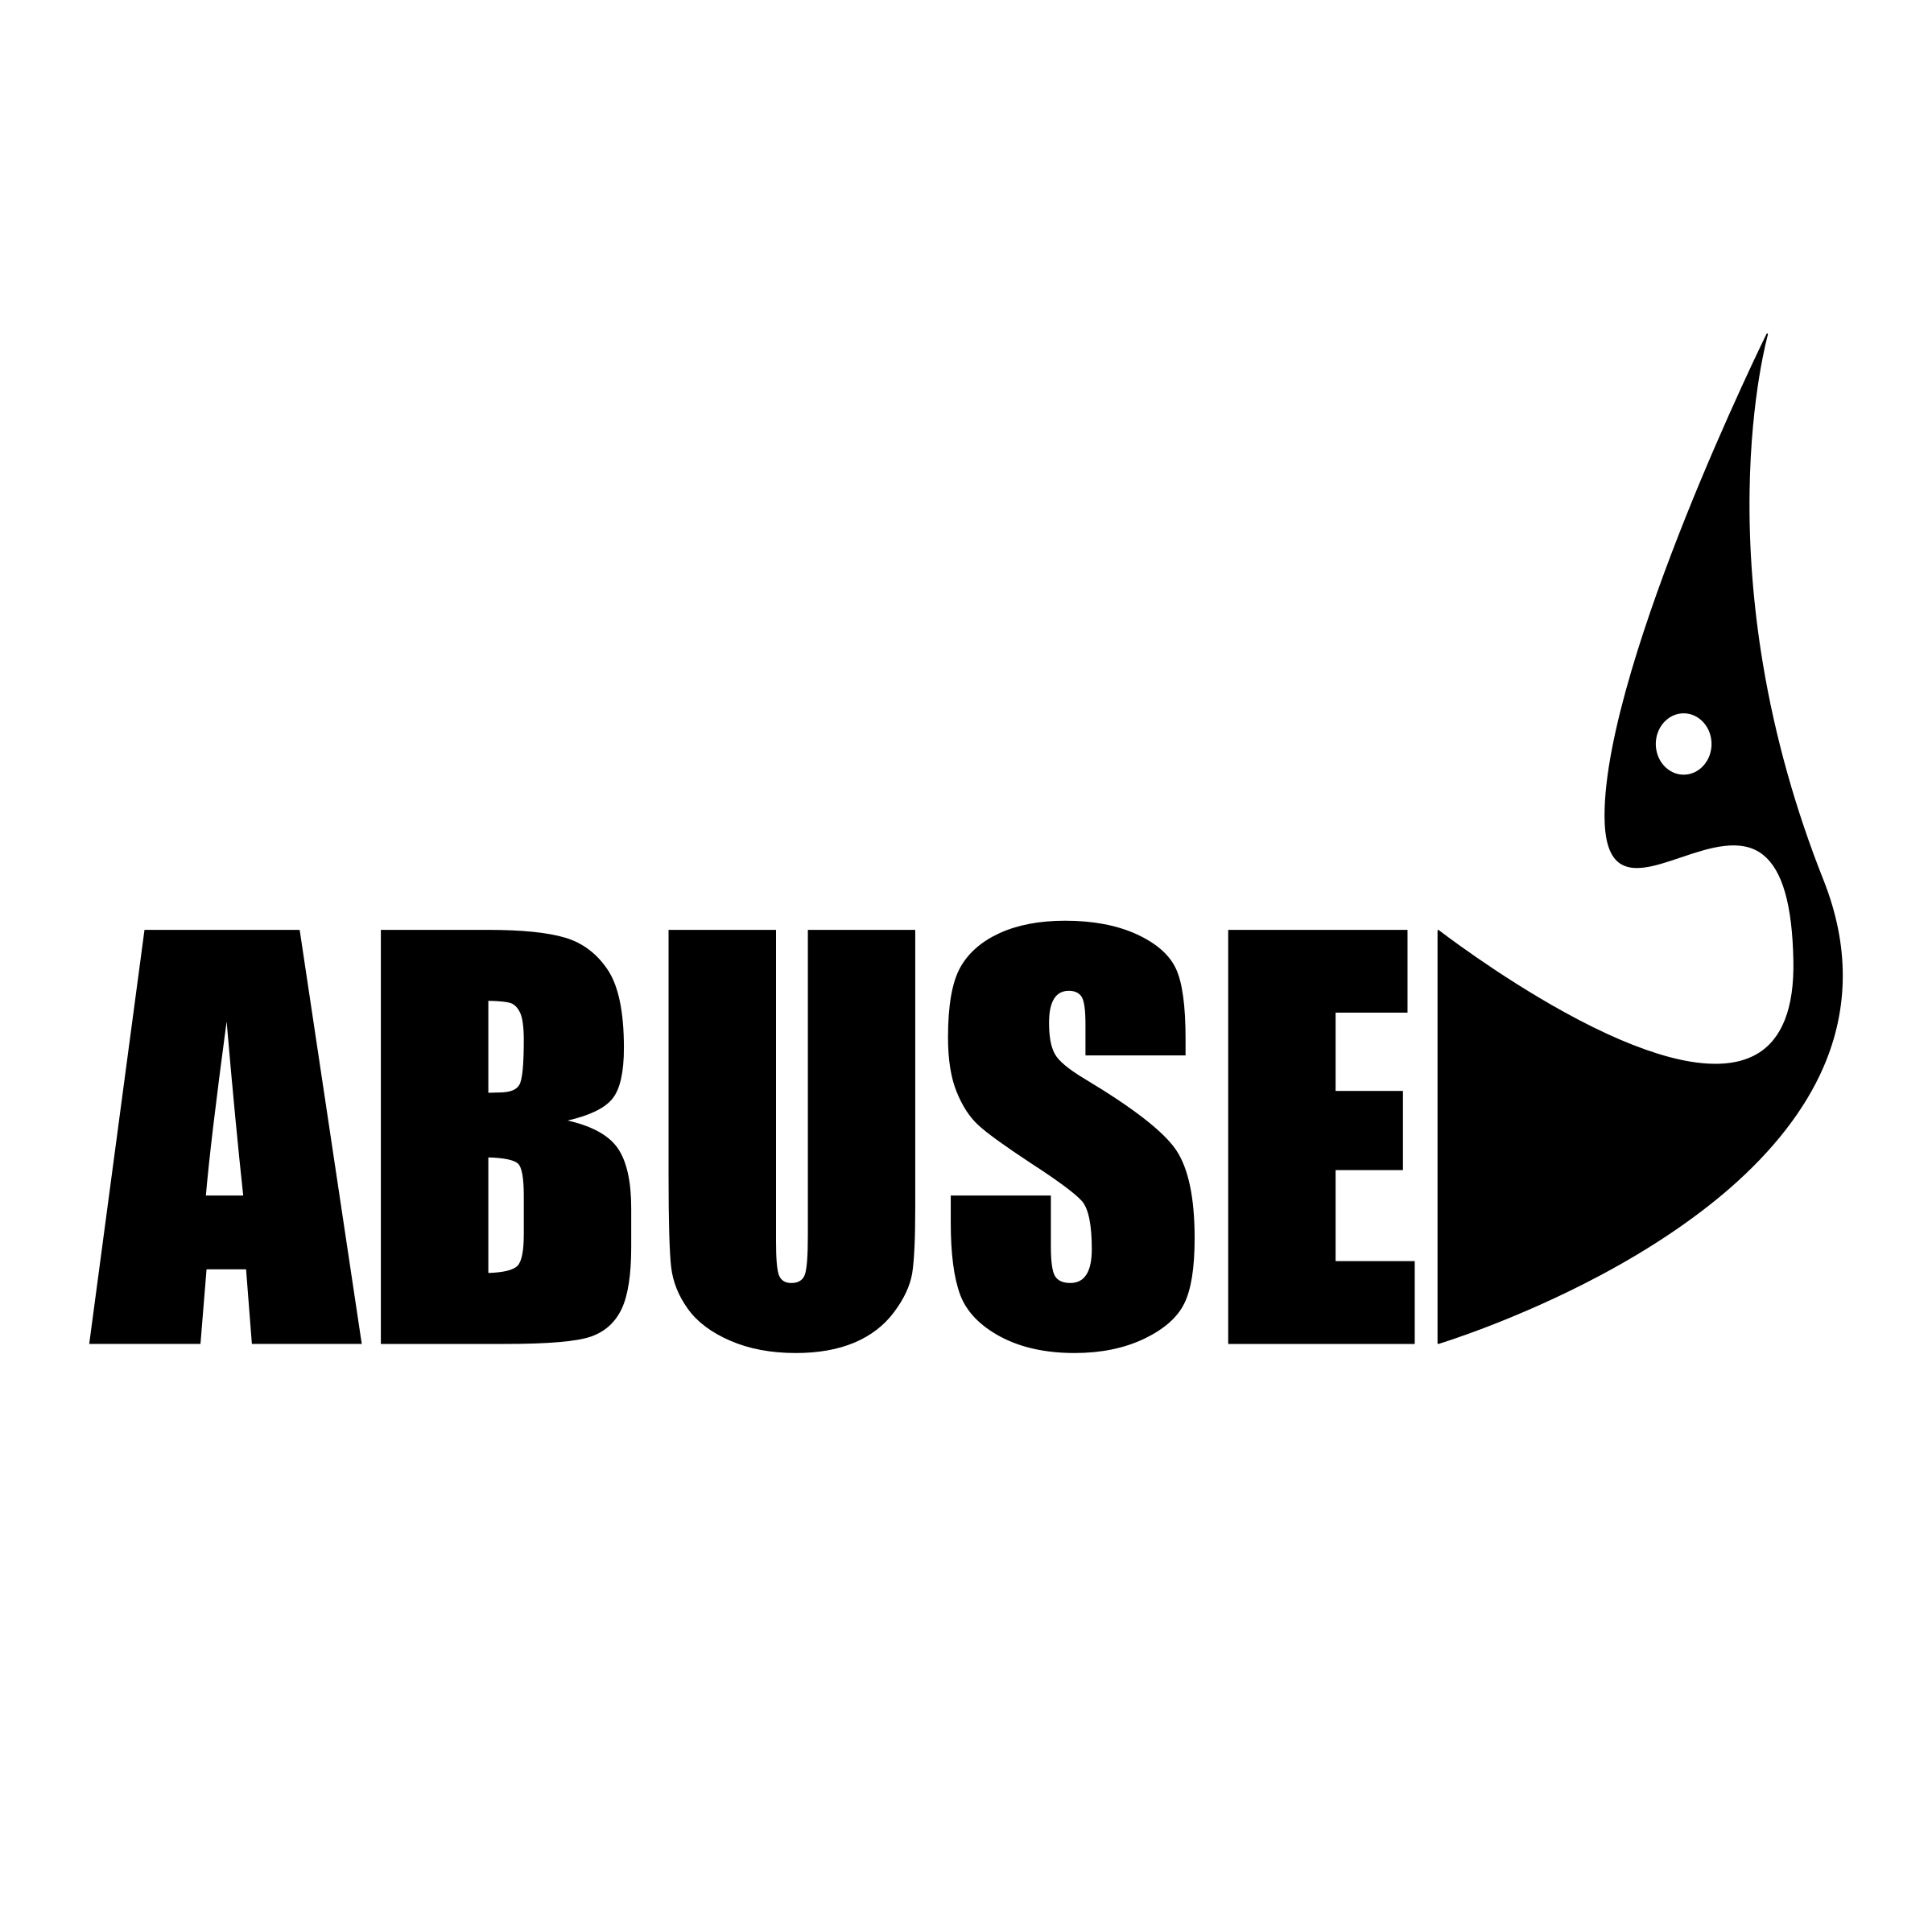 Abuse Logo - Abuse Logo PNG Transparent & SVG Vector